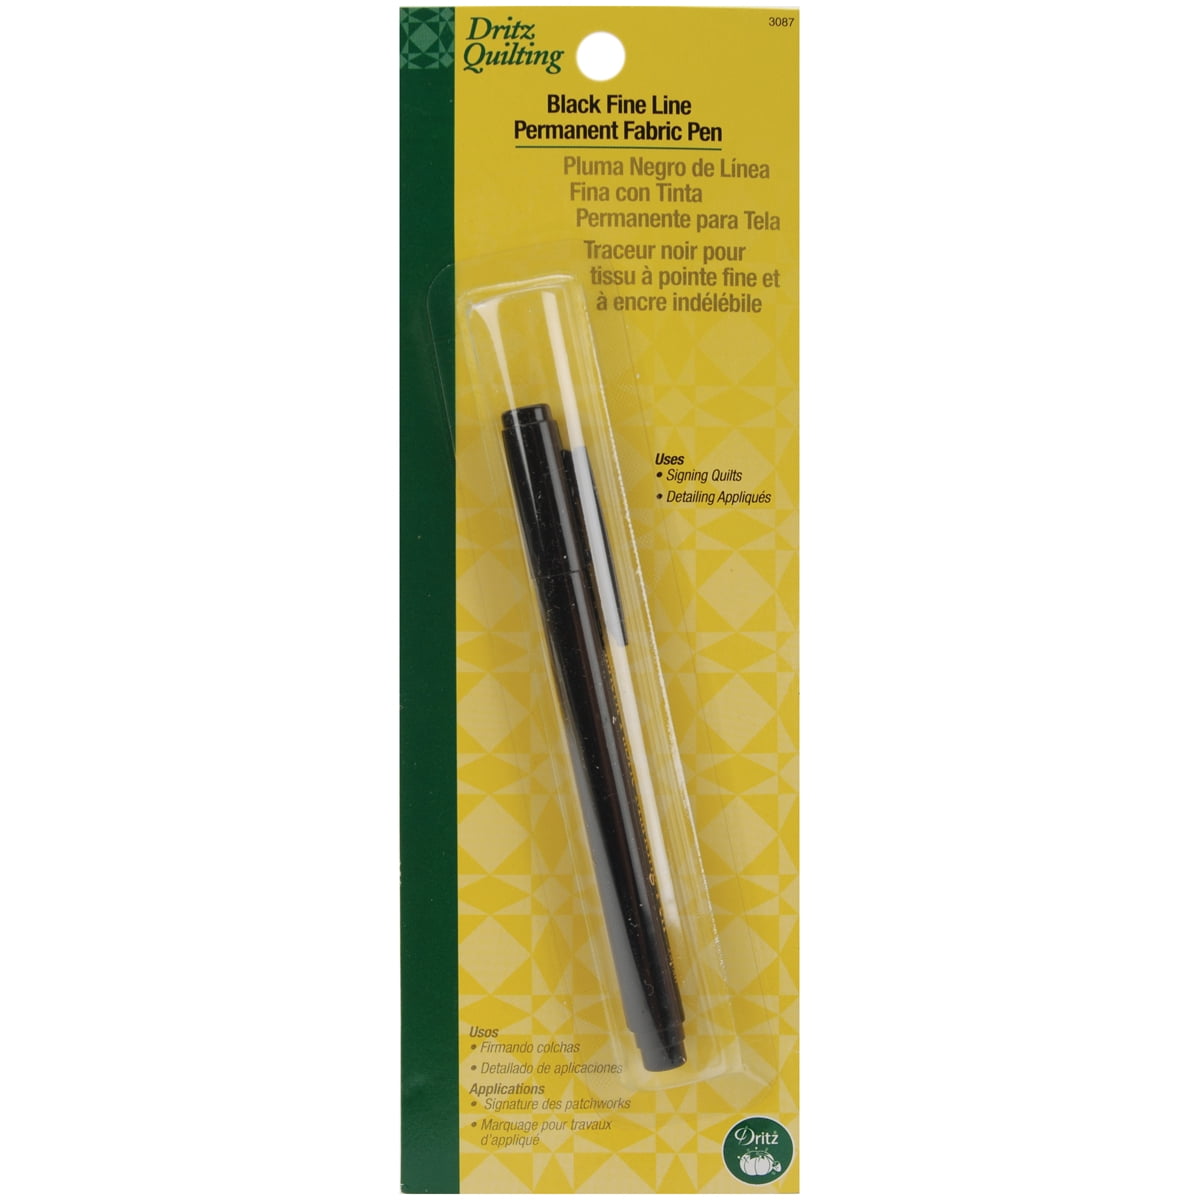 Dritz Fabric Glue Stick Pen- - 072879294439